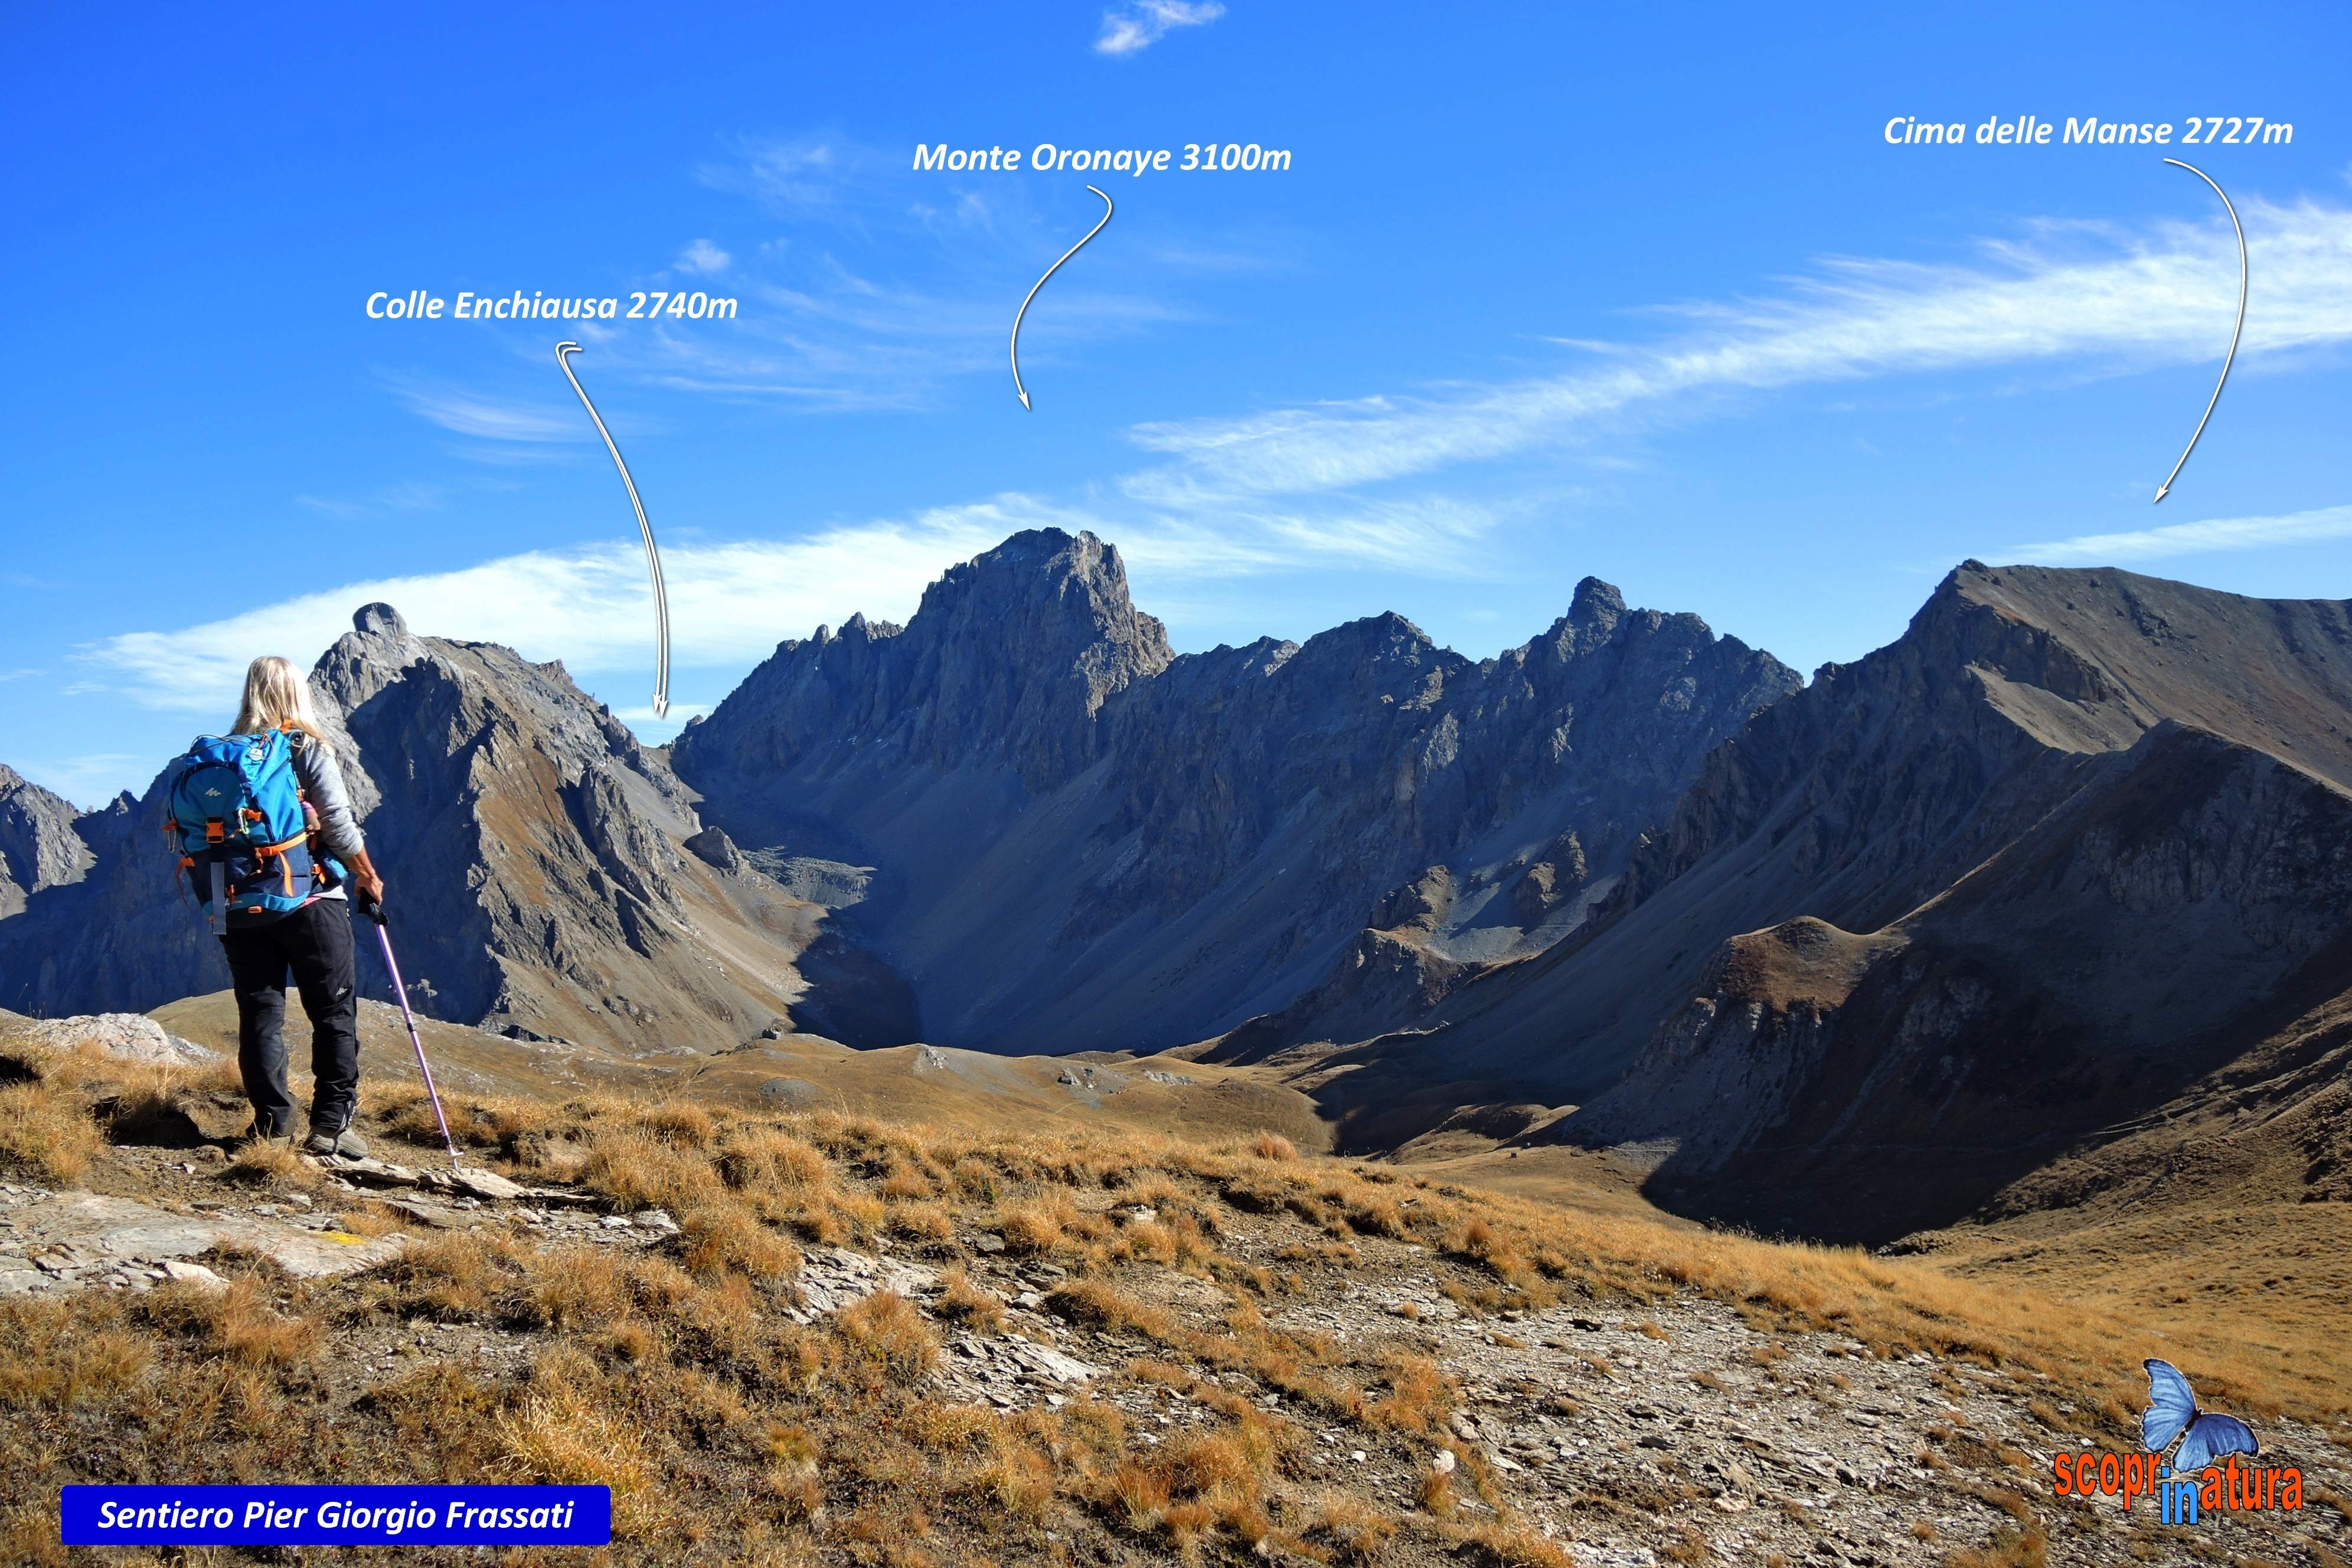 Sentiero Pier Giorgio Frassati :  Colle Enchiausa 2740m, Monte Oronaye 3100m, Cima delleManse 2727m